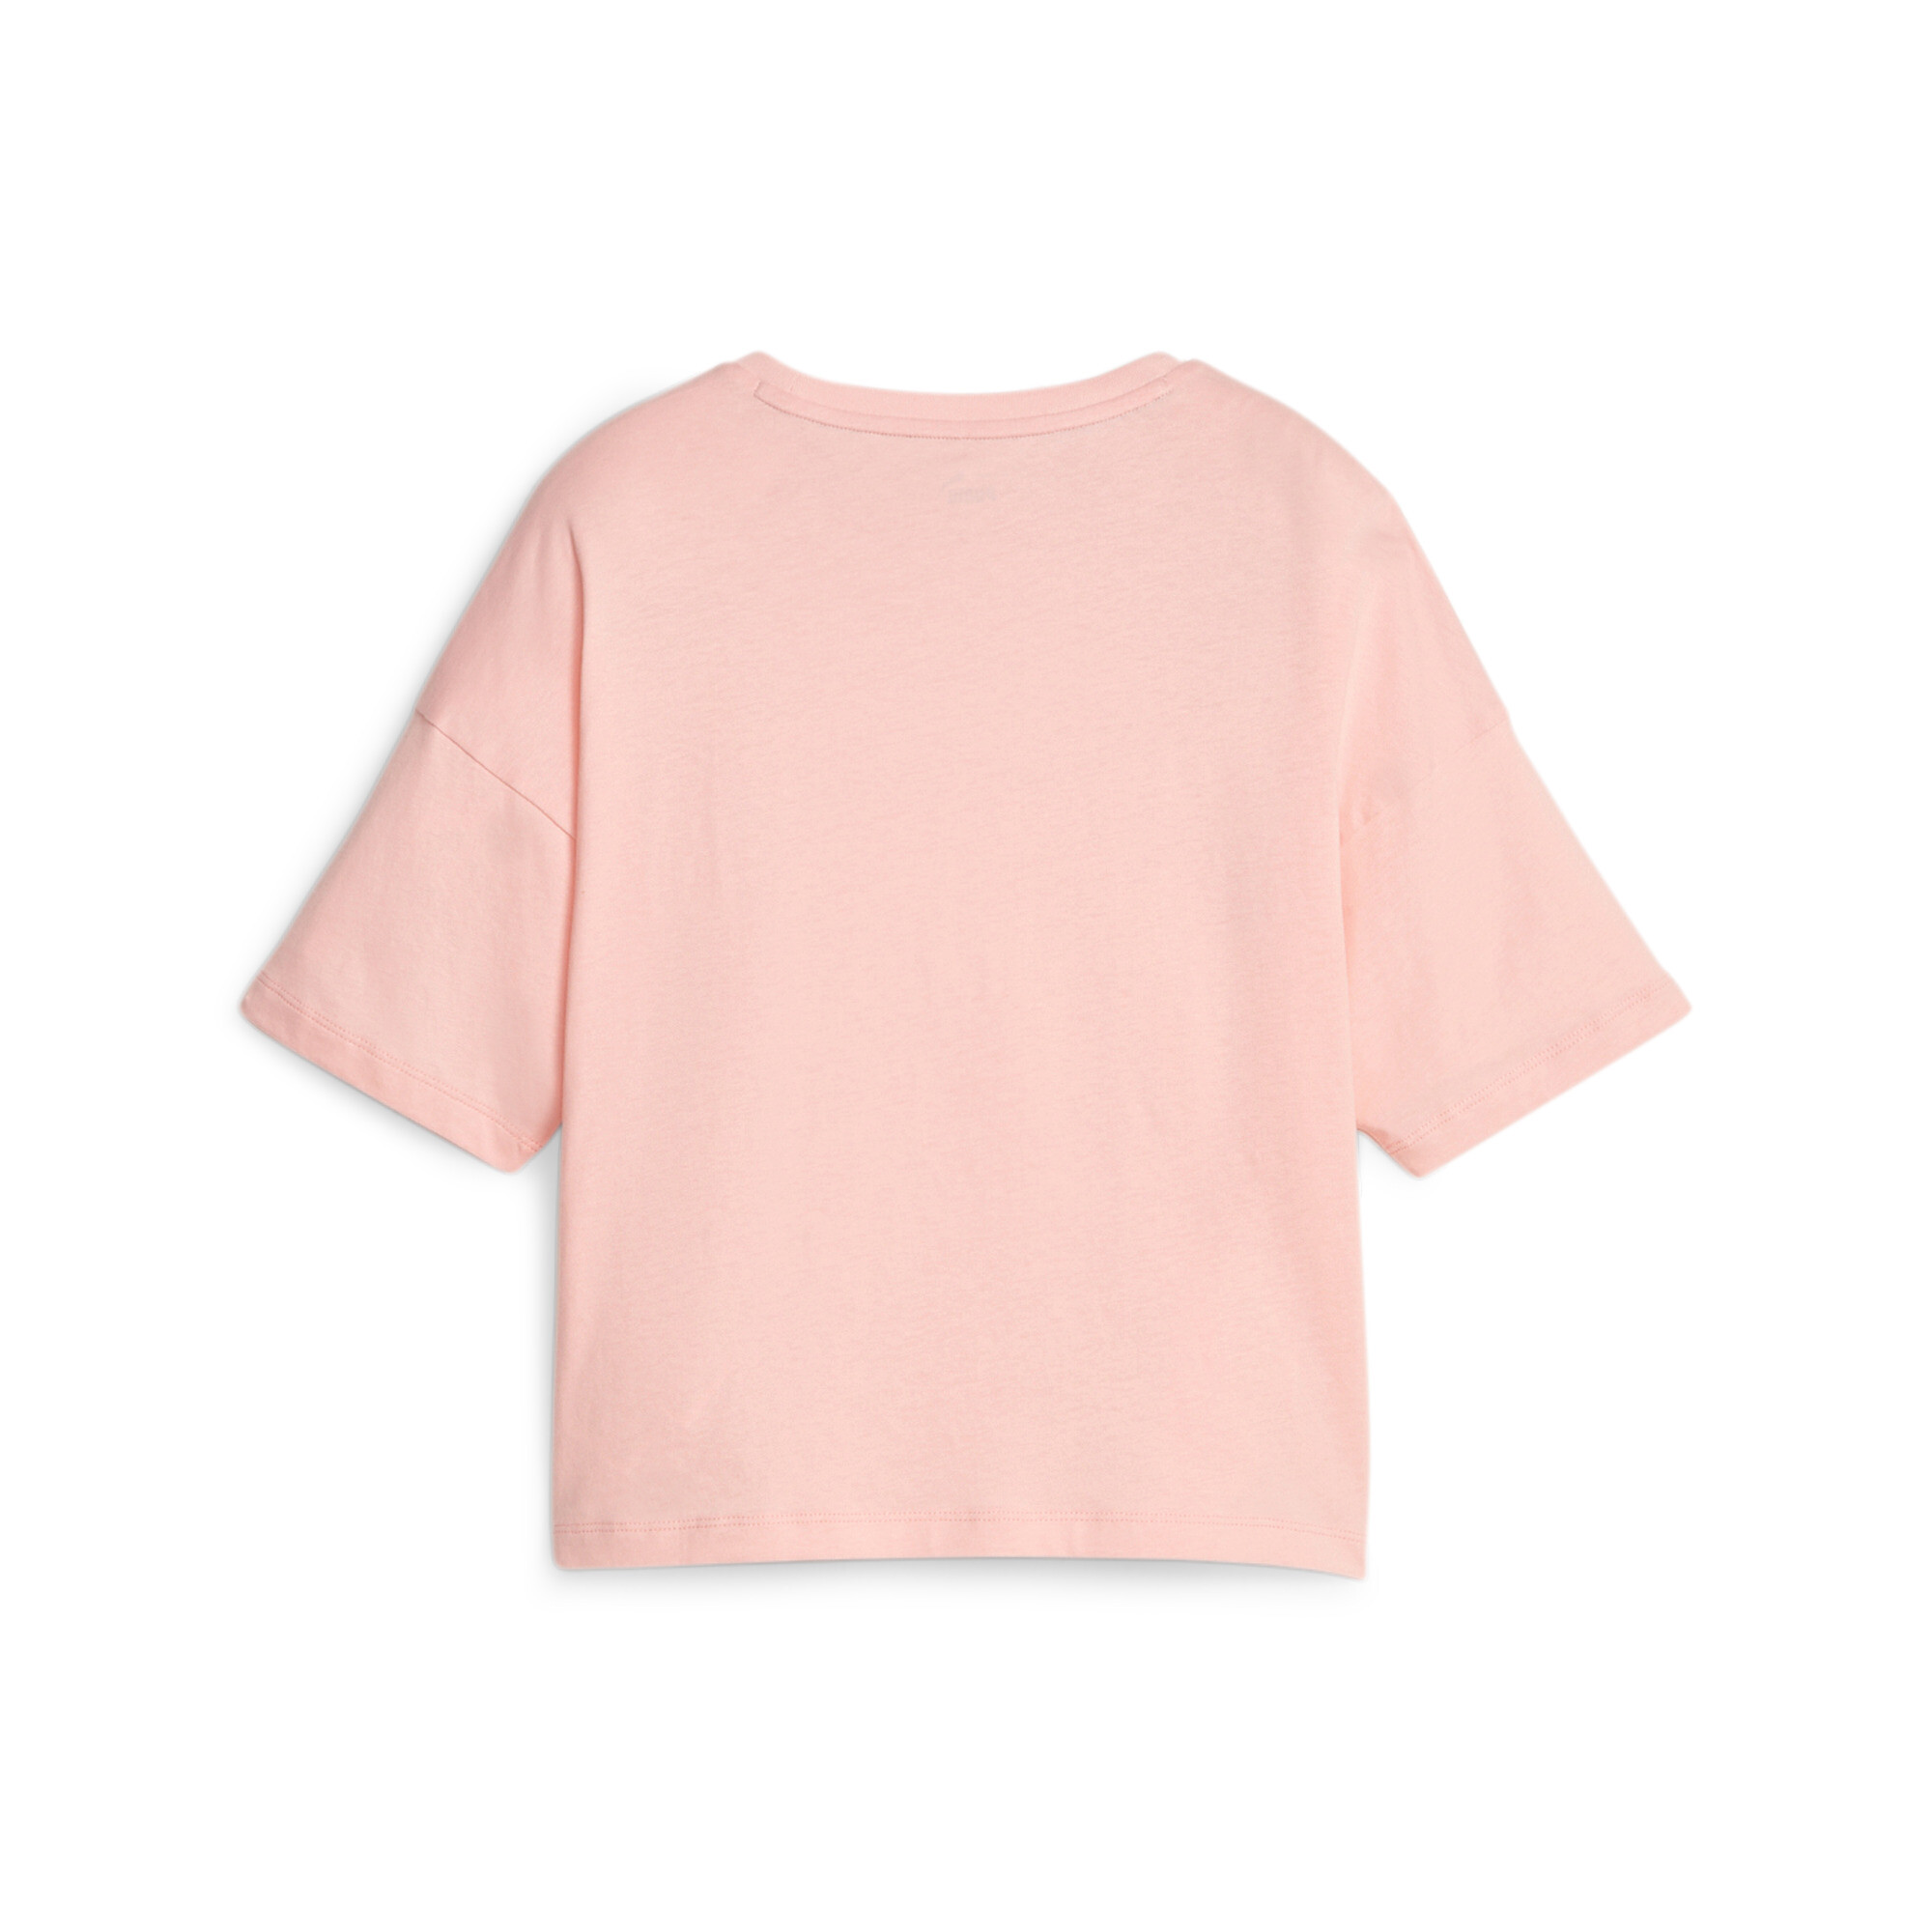 Women's Puma Essentials Logo Cropped T-Shirt, Pink, Size L, Clothing